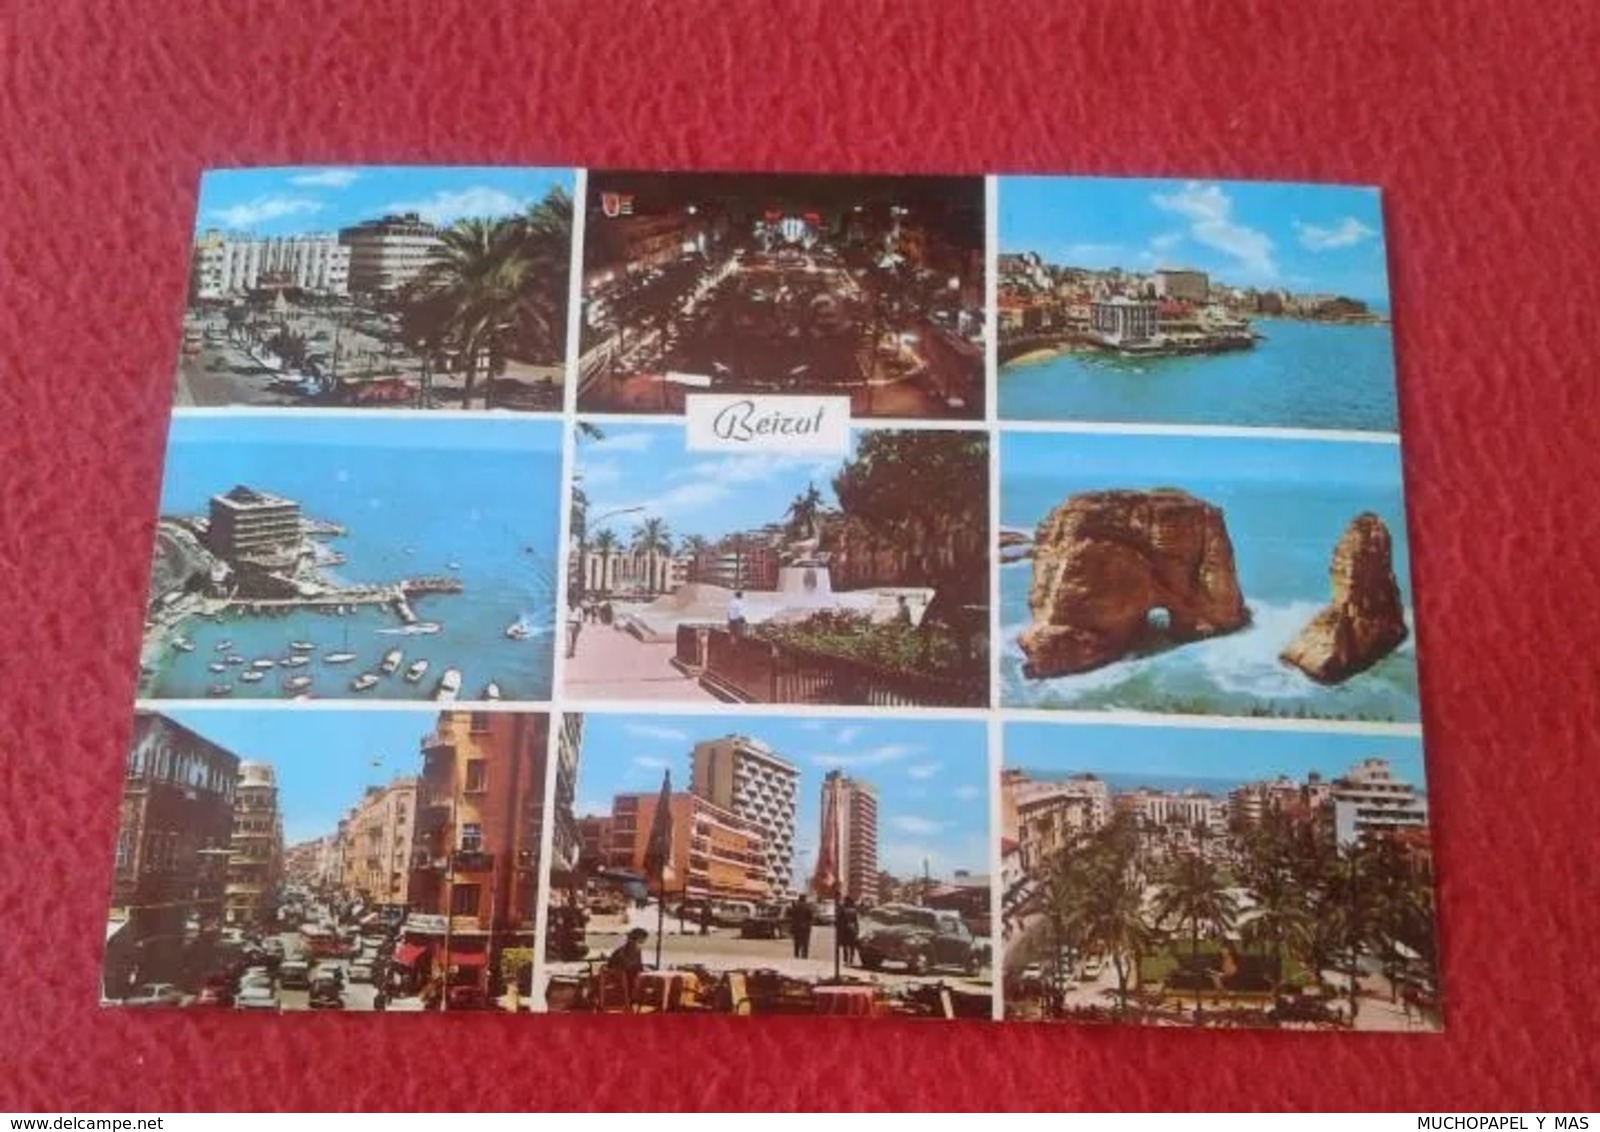 POSTAL POST CARD LIBANO BEIRUT BEYROUTH LEBANON DIVERSAS VISTAS VER FOTO/S Y DESCRIPCIÓN. CARTE POSTALE IDEAL COLECCIÓN - Libano